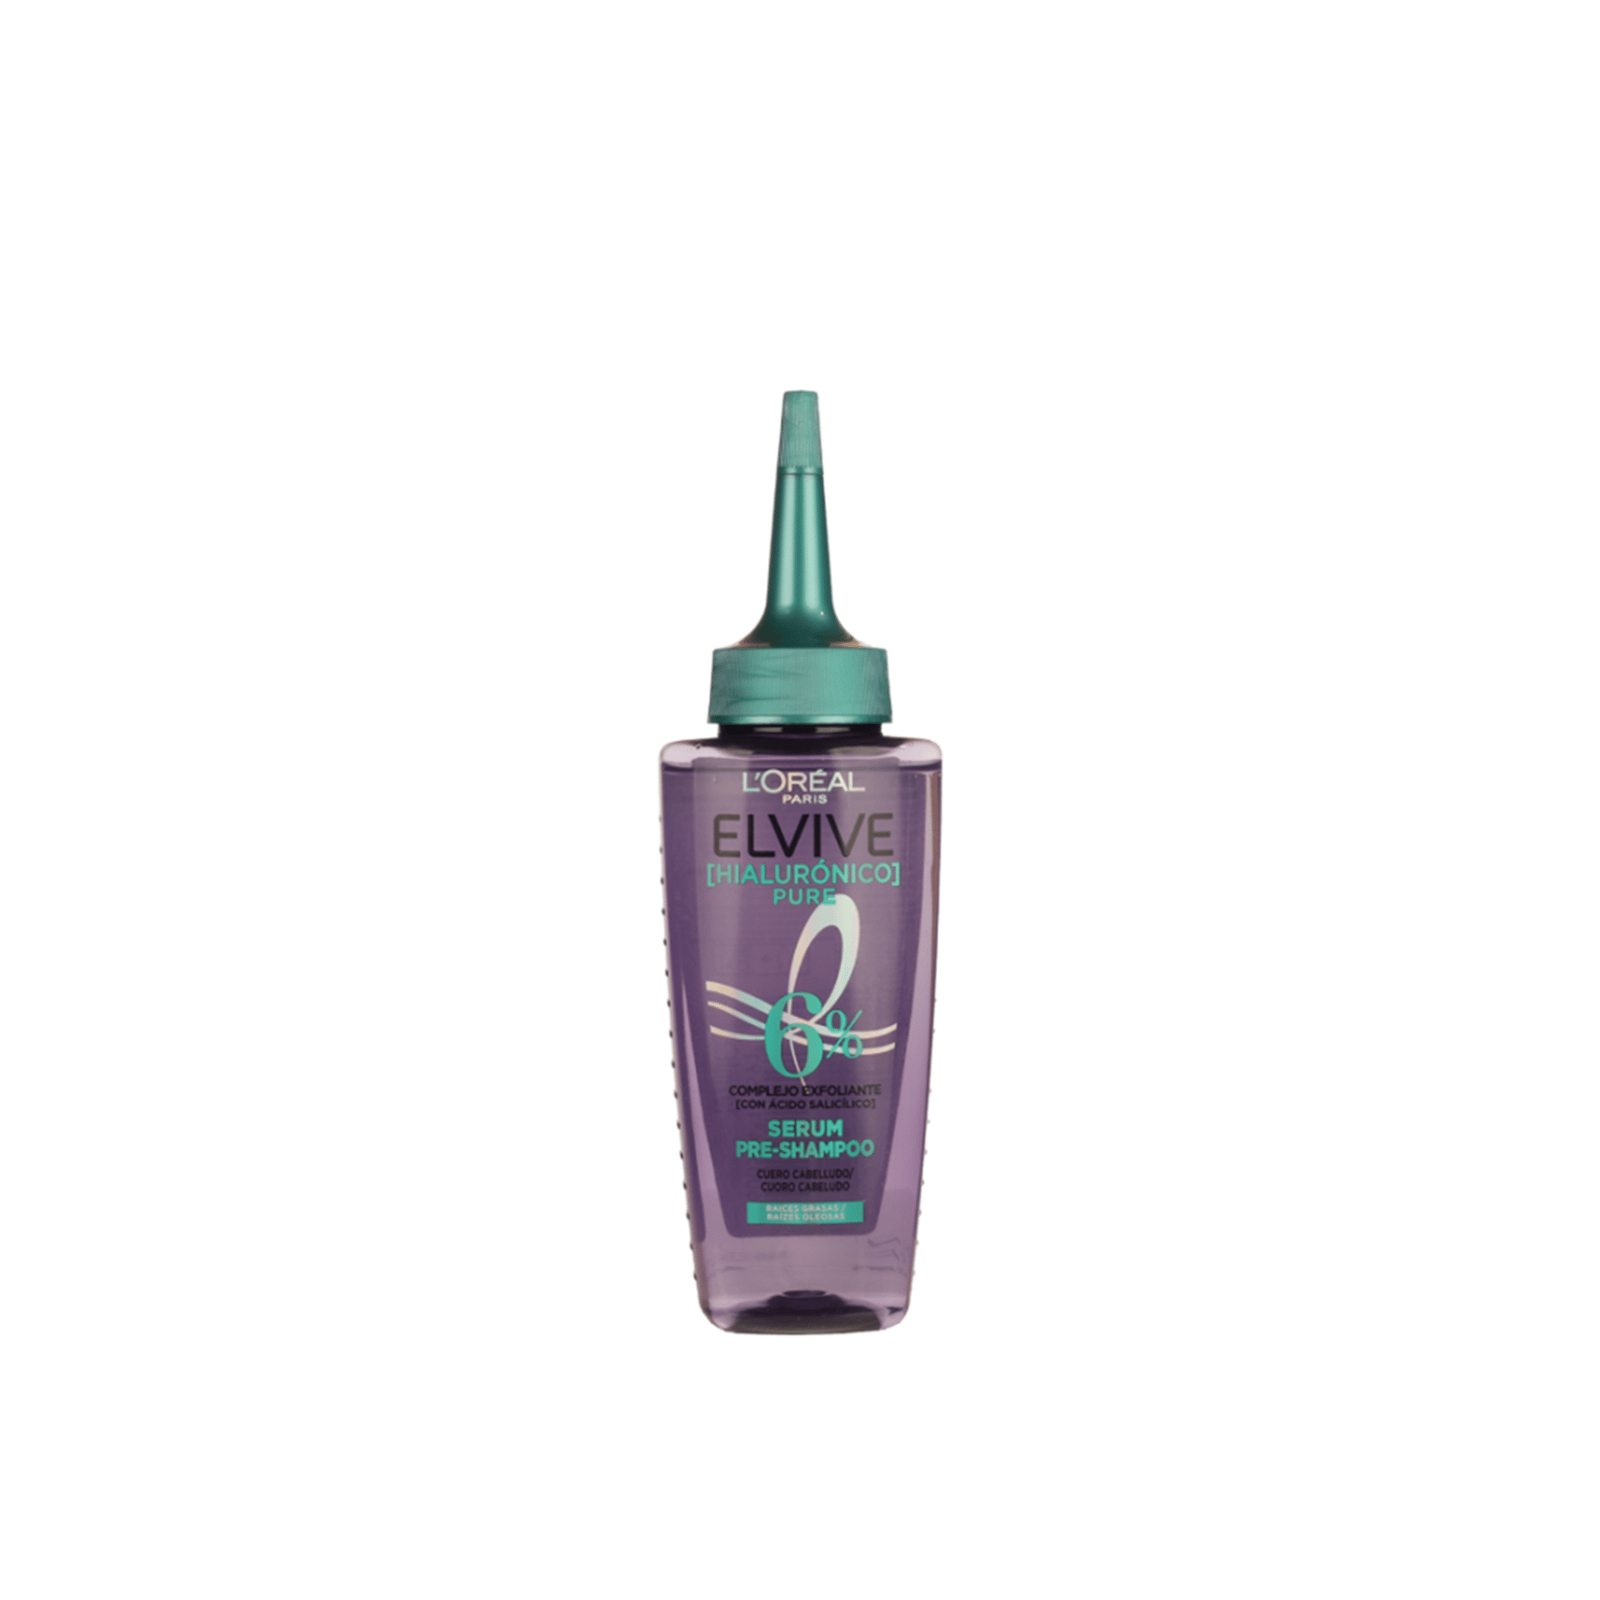 L'Oréal Paris Elvive Hyaluronic Pure Serum Pre-Shampoo 102ml (3.44 fl oz)